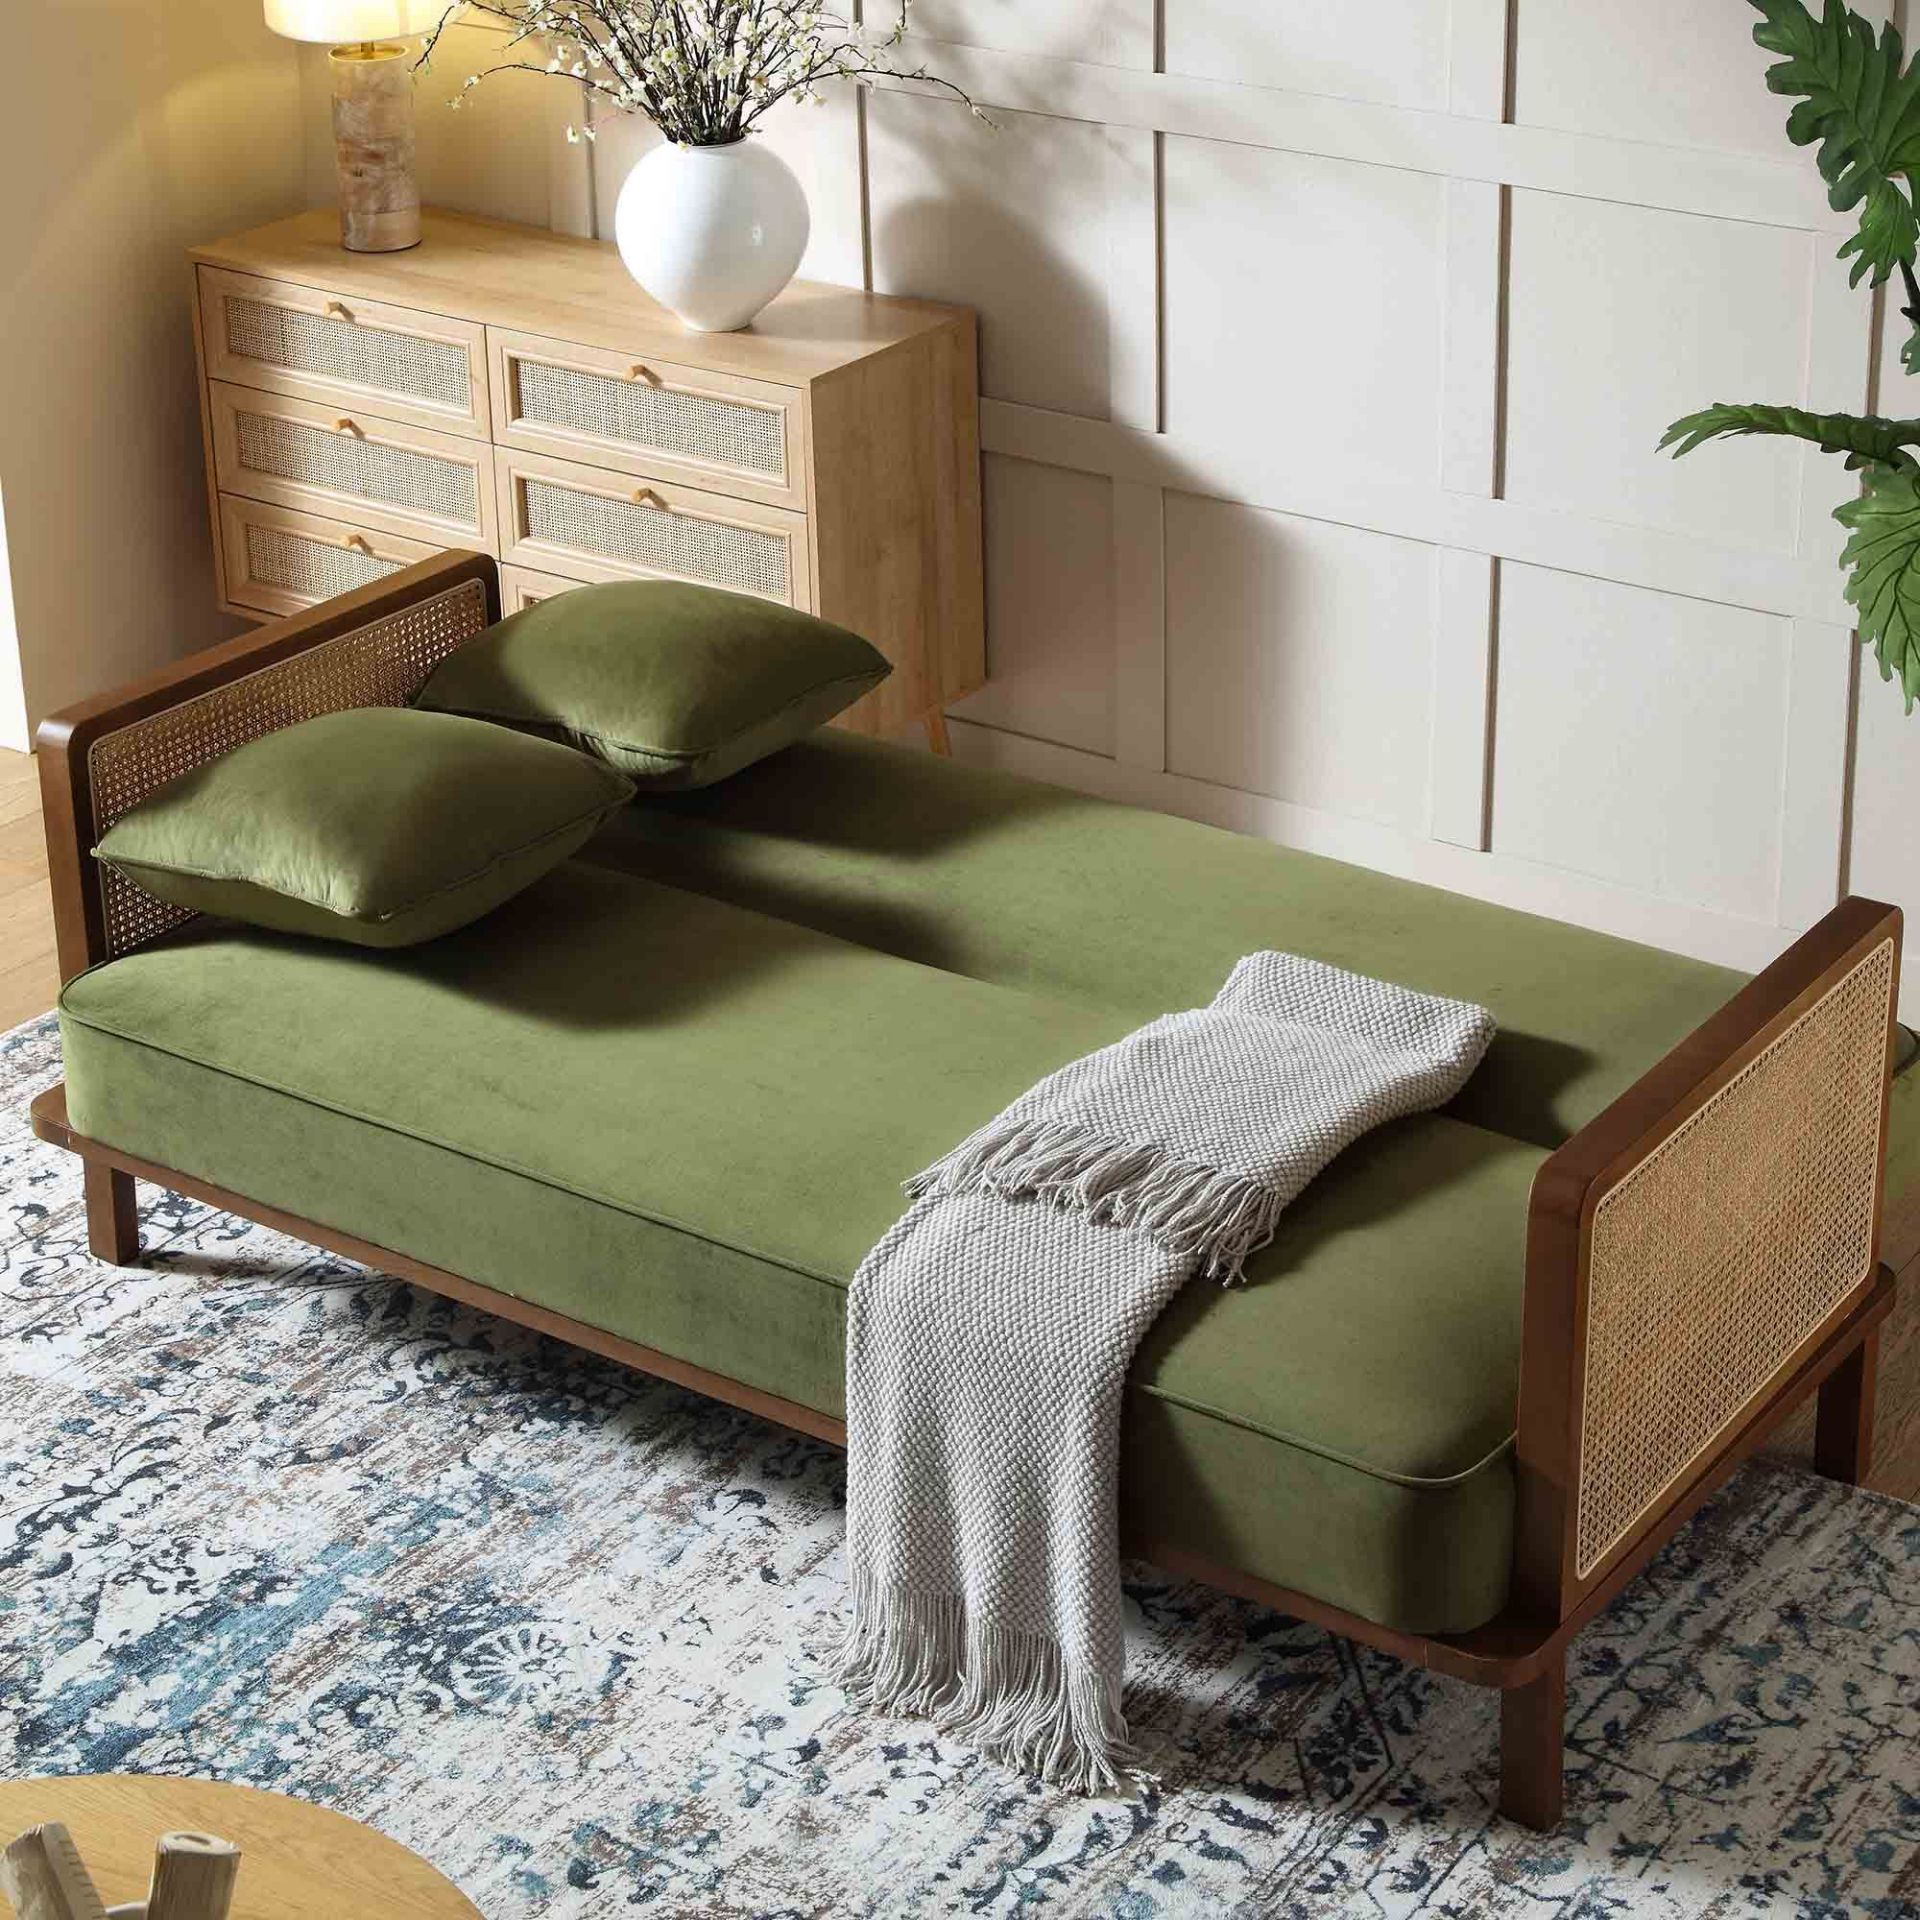 Pienza Cane Sofa Bed, Moss Green Velvet with Walnut Frame. -ER23. RRP £649.99. Upholstered in - Bild 2 aus 2